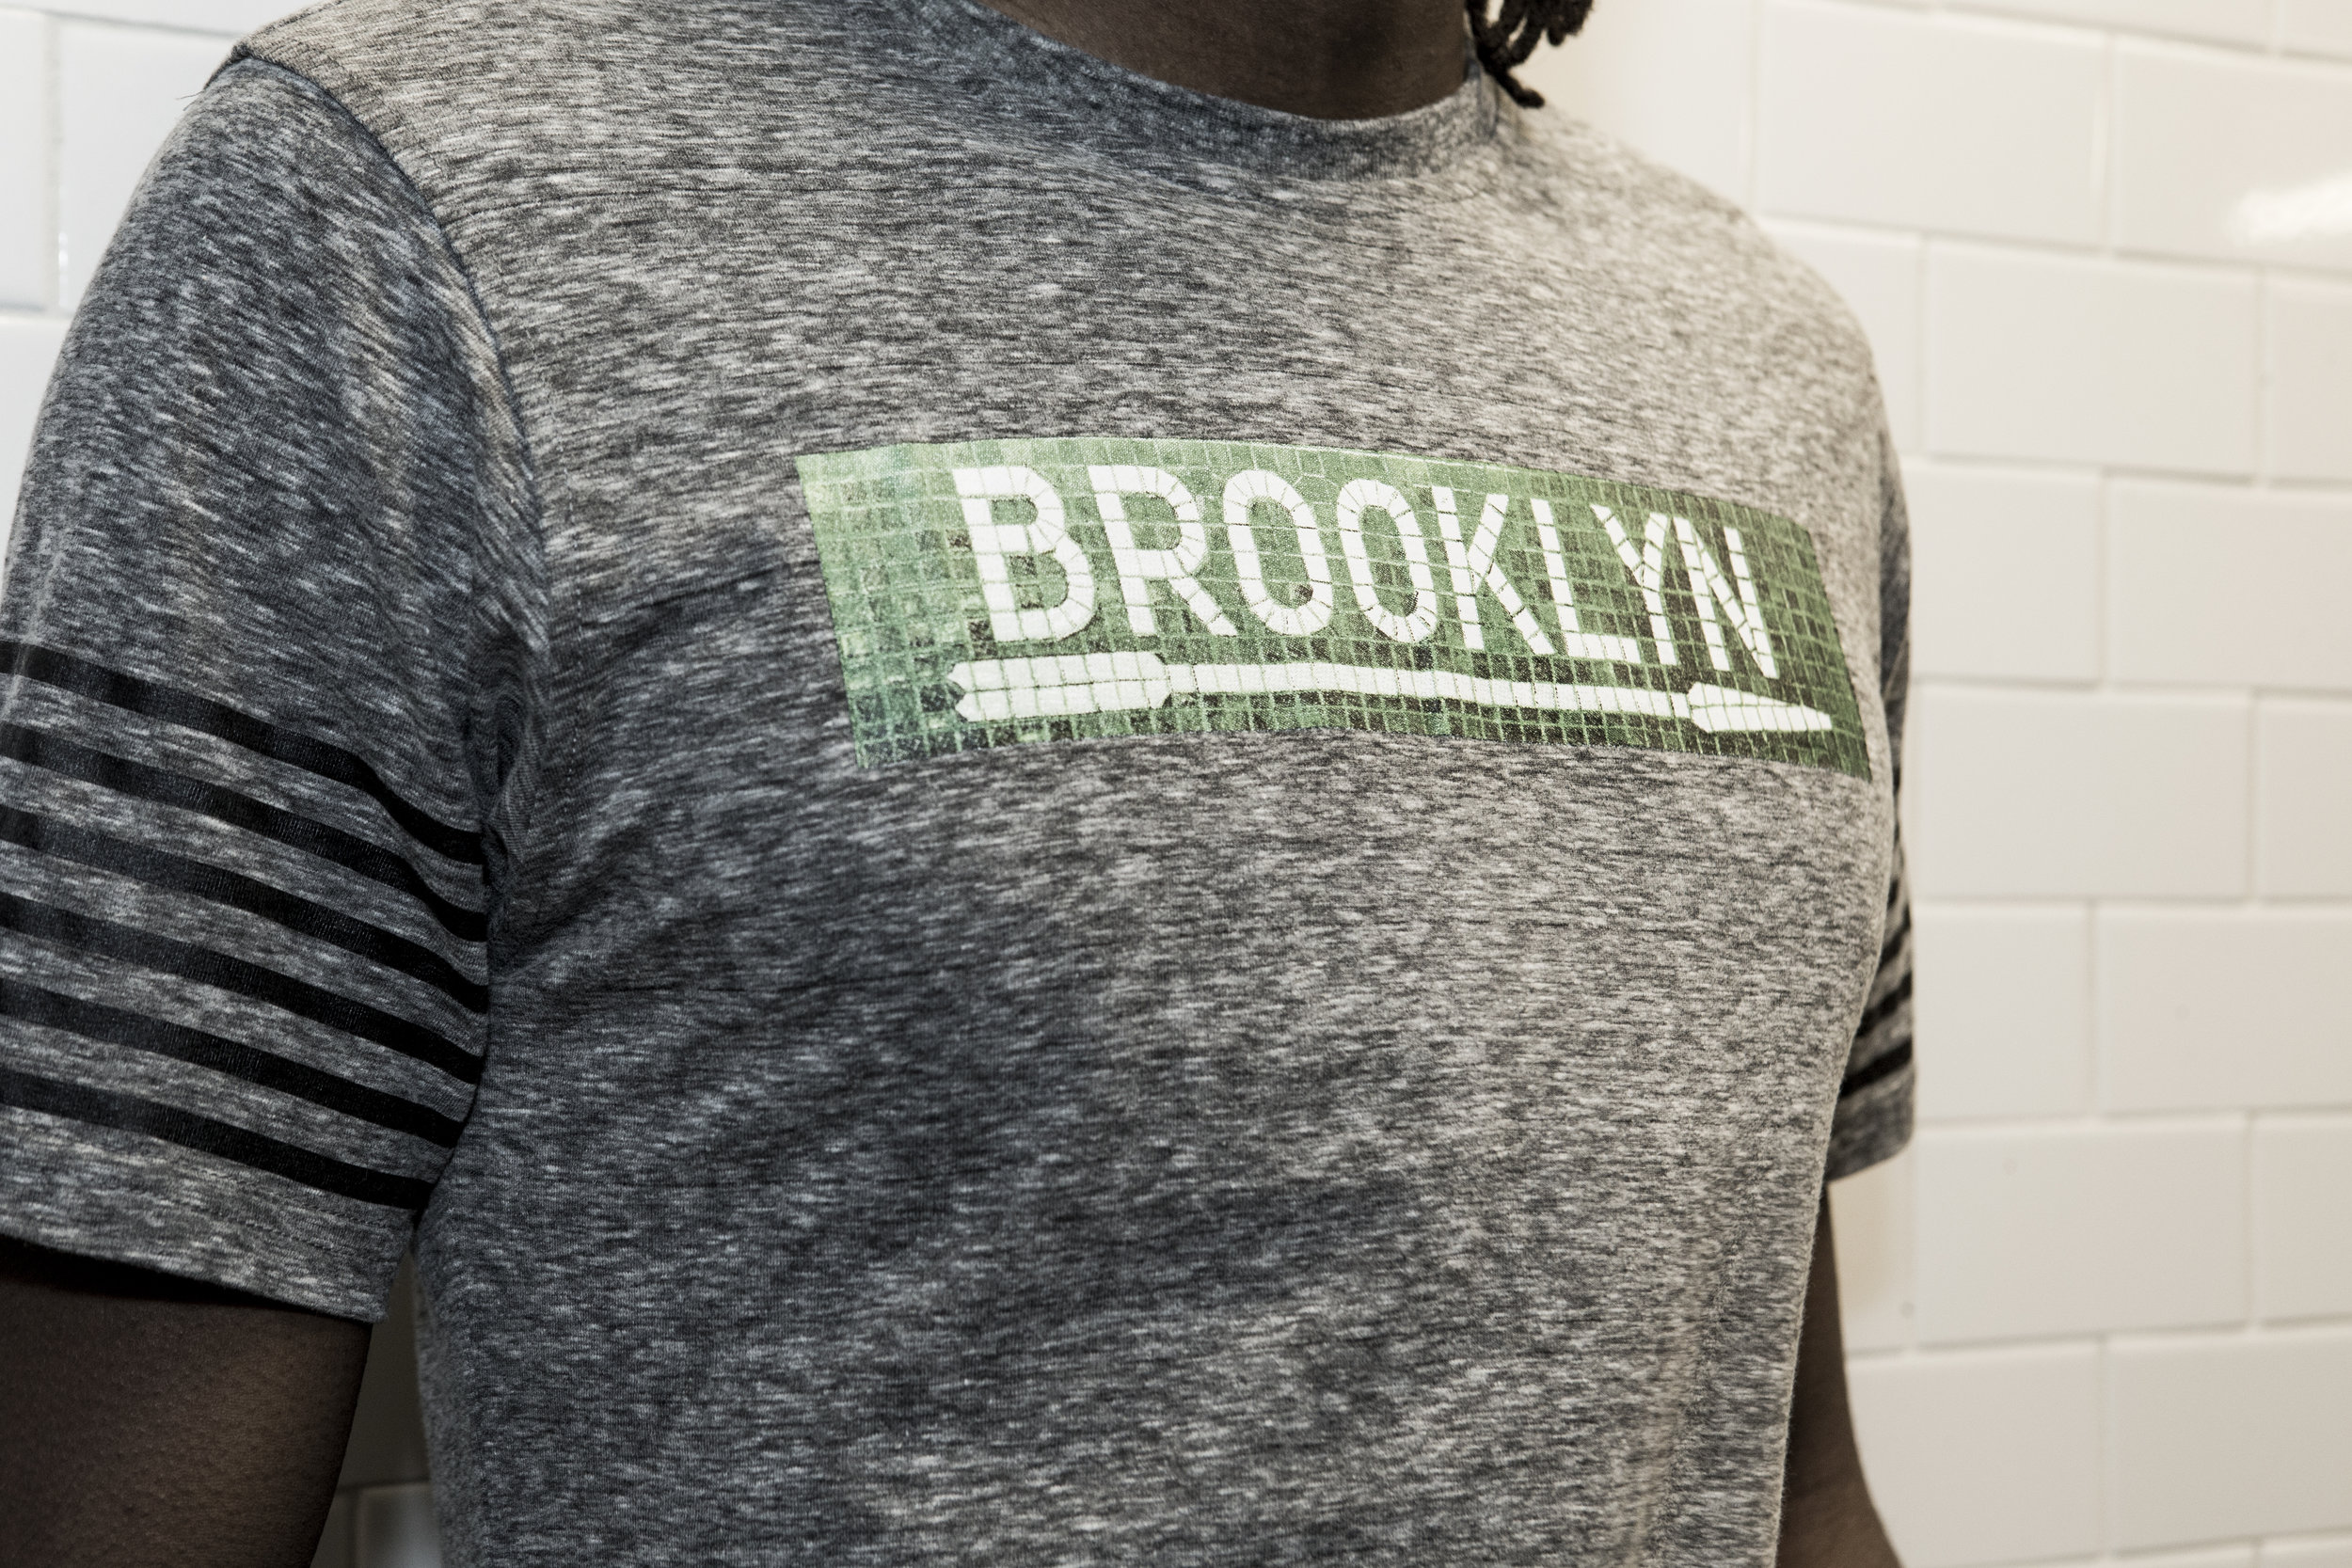 Grungy Gentleman x Subway Tile Shirts 20.JPG